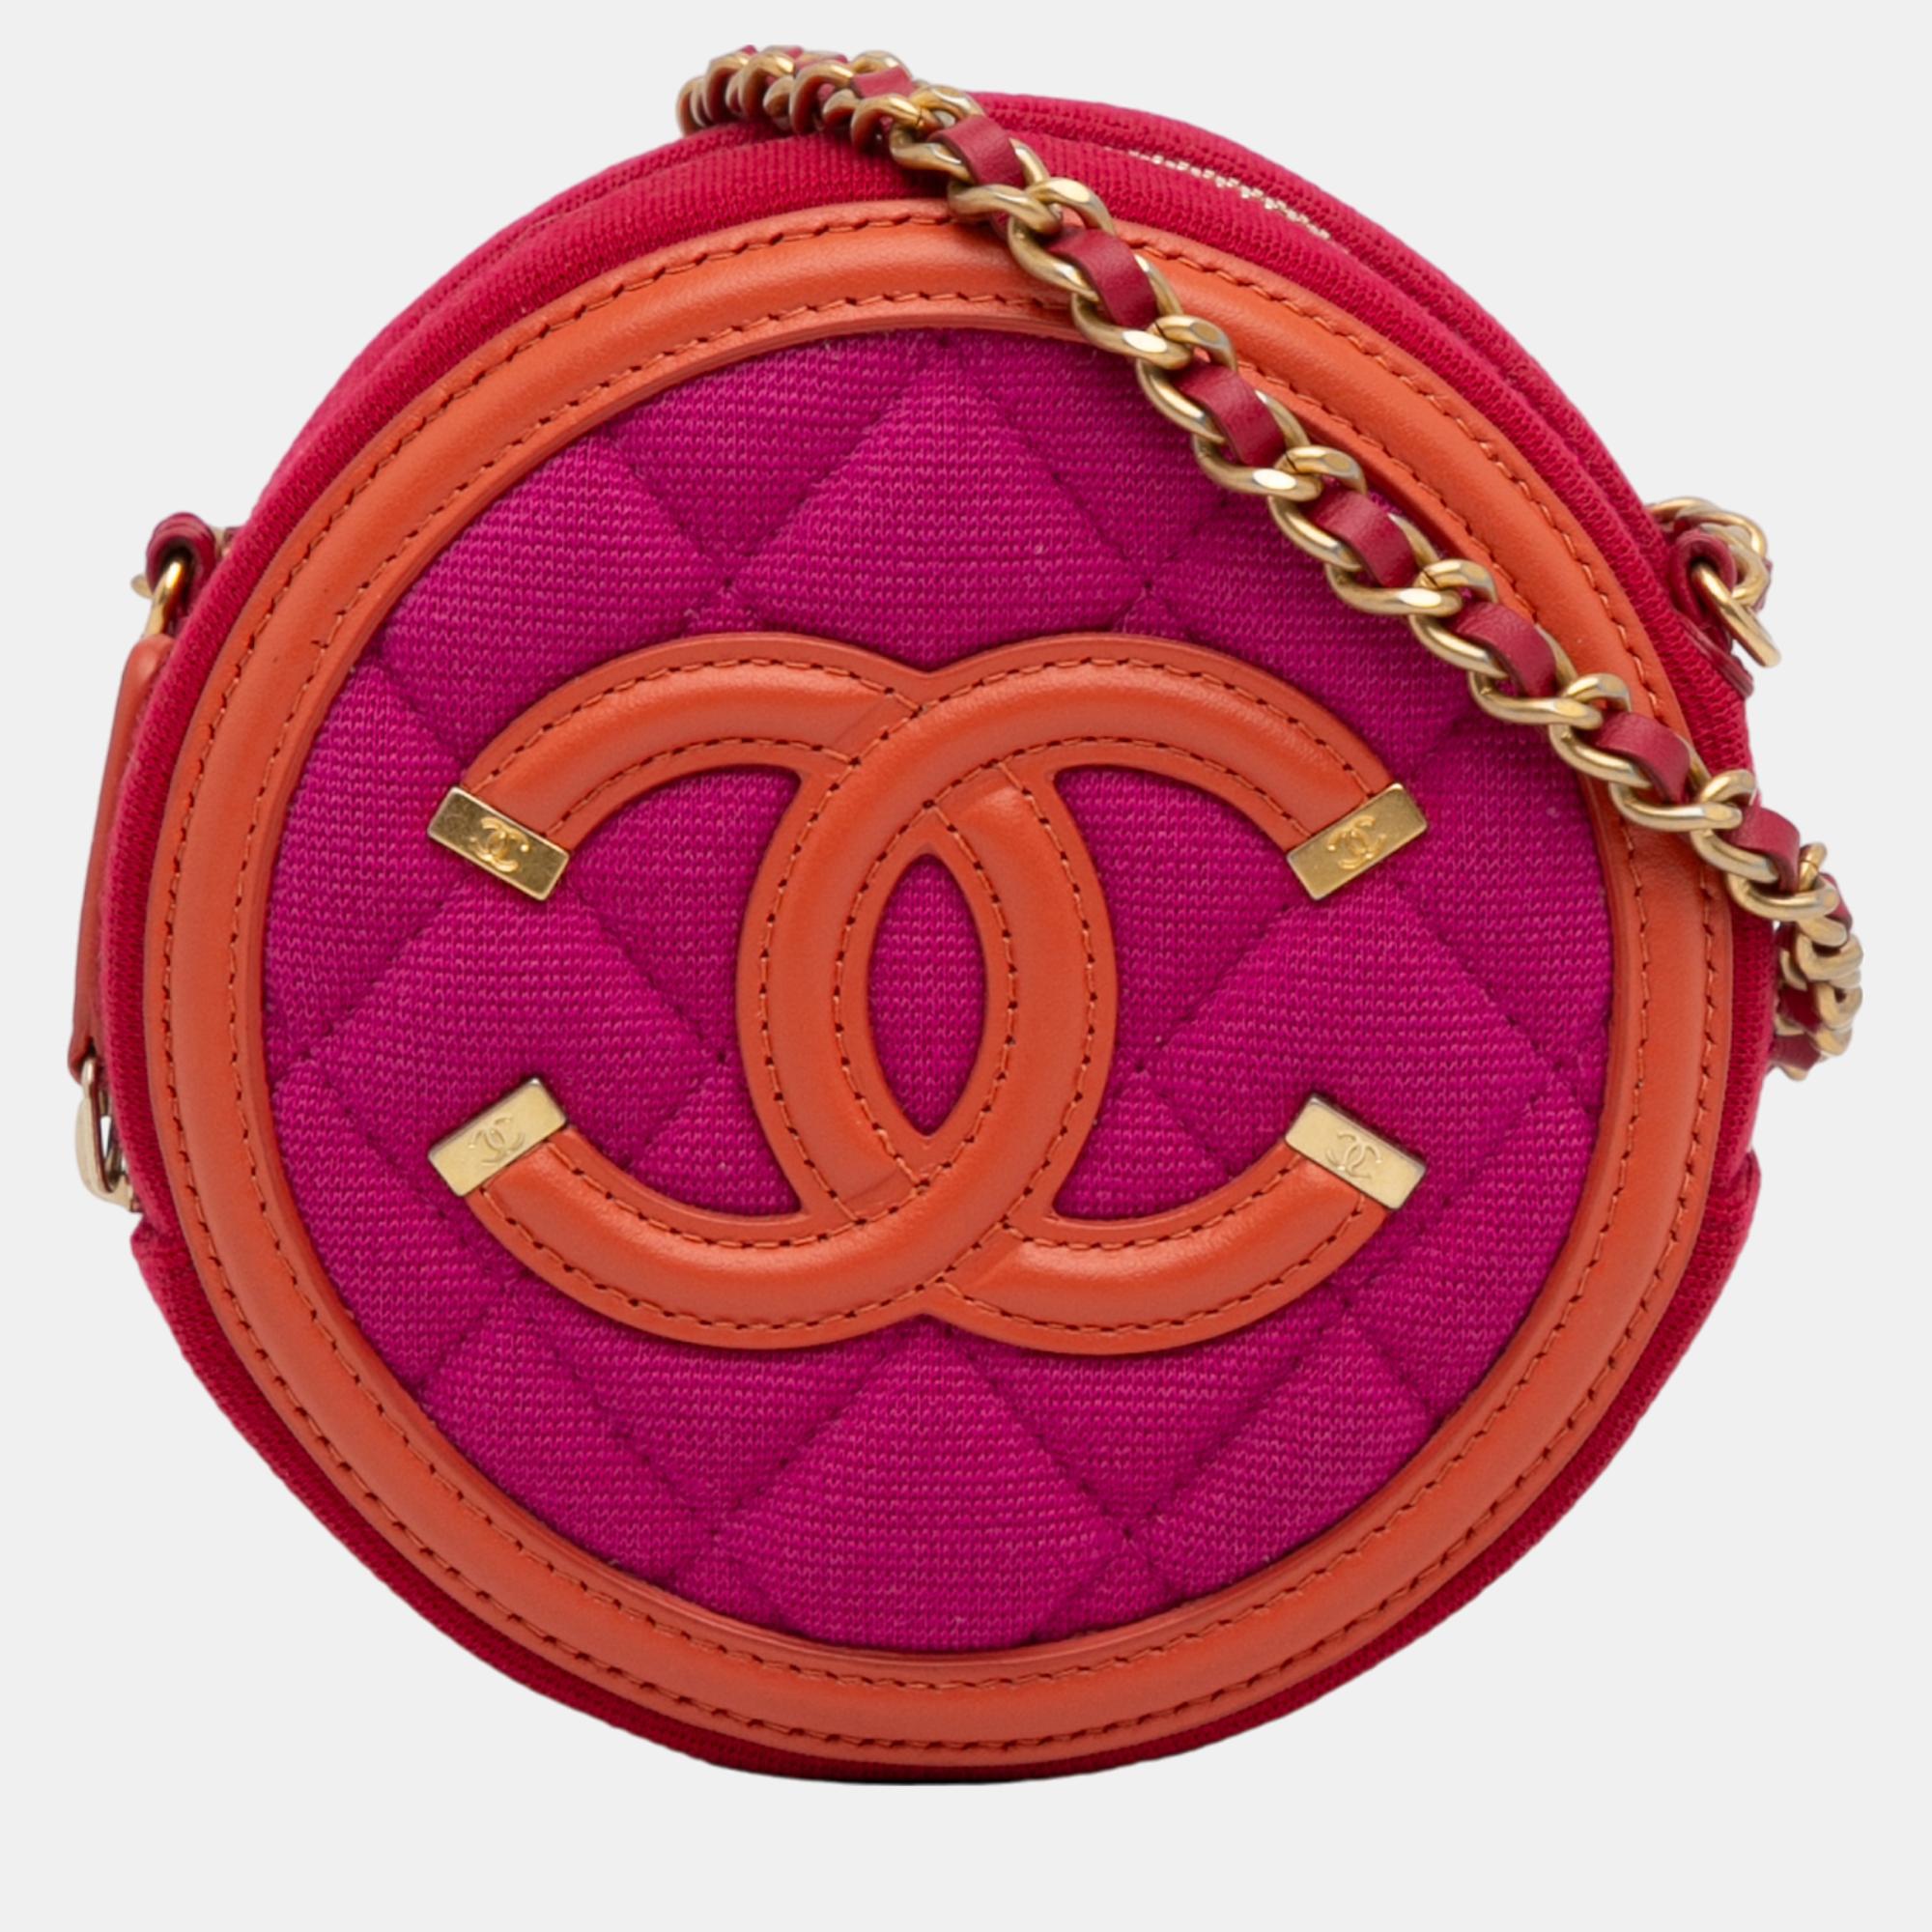 Chanel orange/pink cc filigree crossbody bag